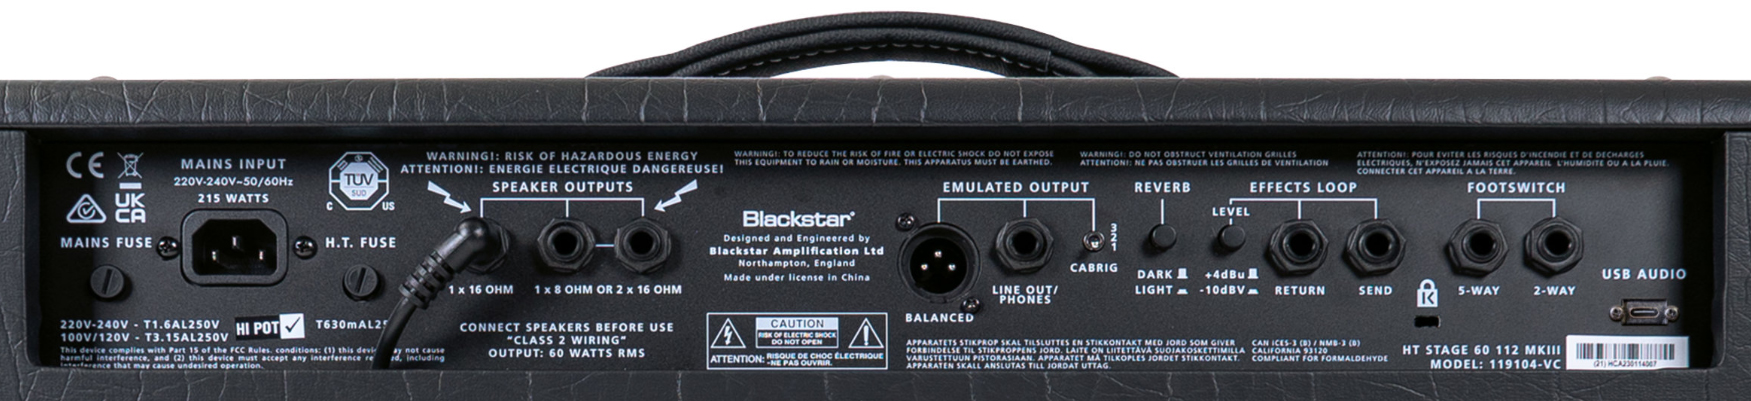 Blackstar Ht Venue Stage 60 112 Mkiii 60w 1x12 El34 - Electric guitar combo amp - Variation 4